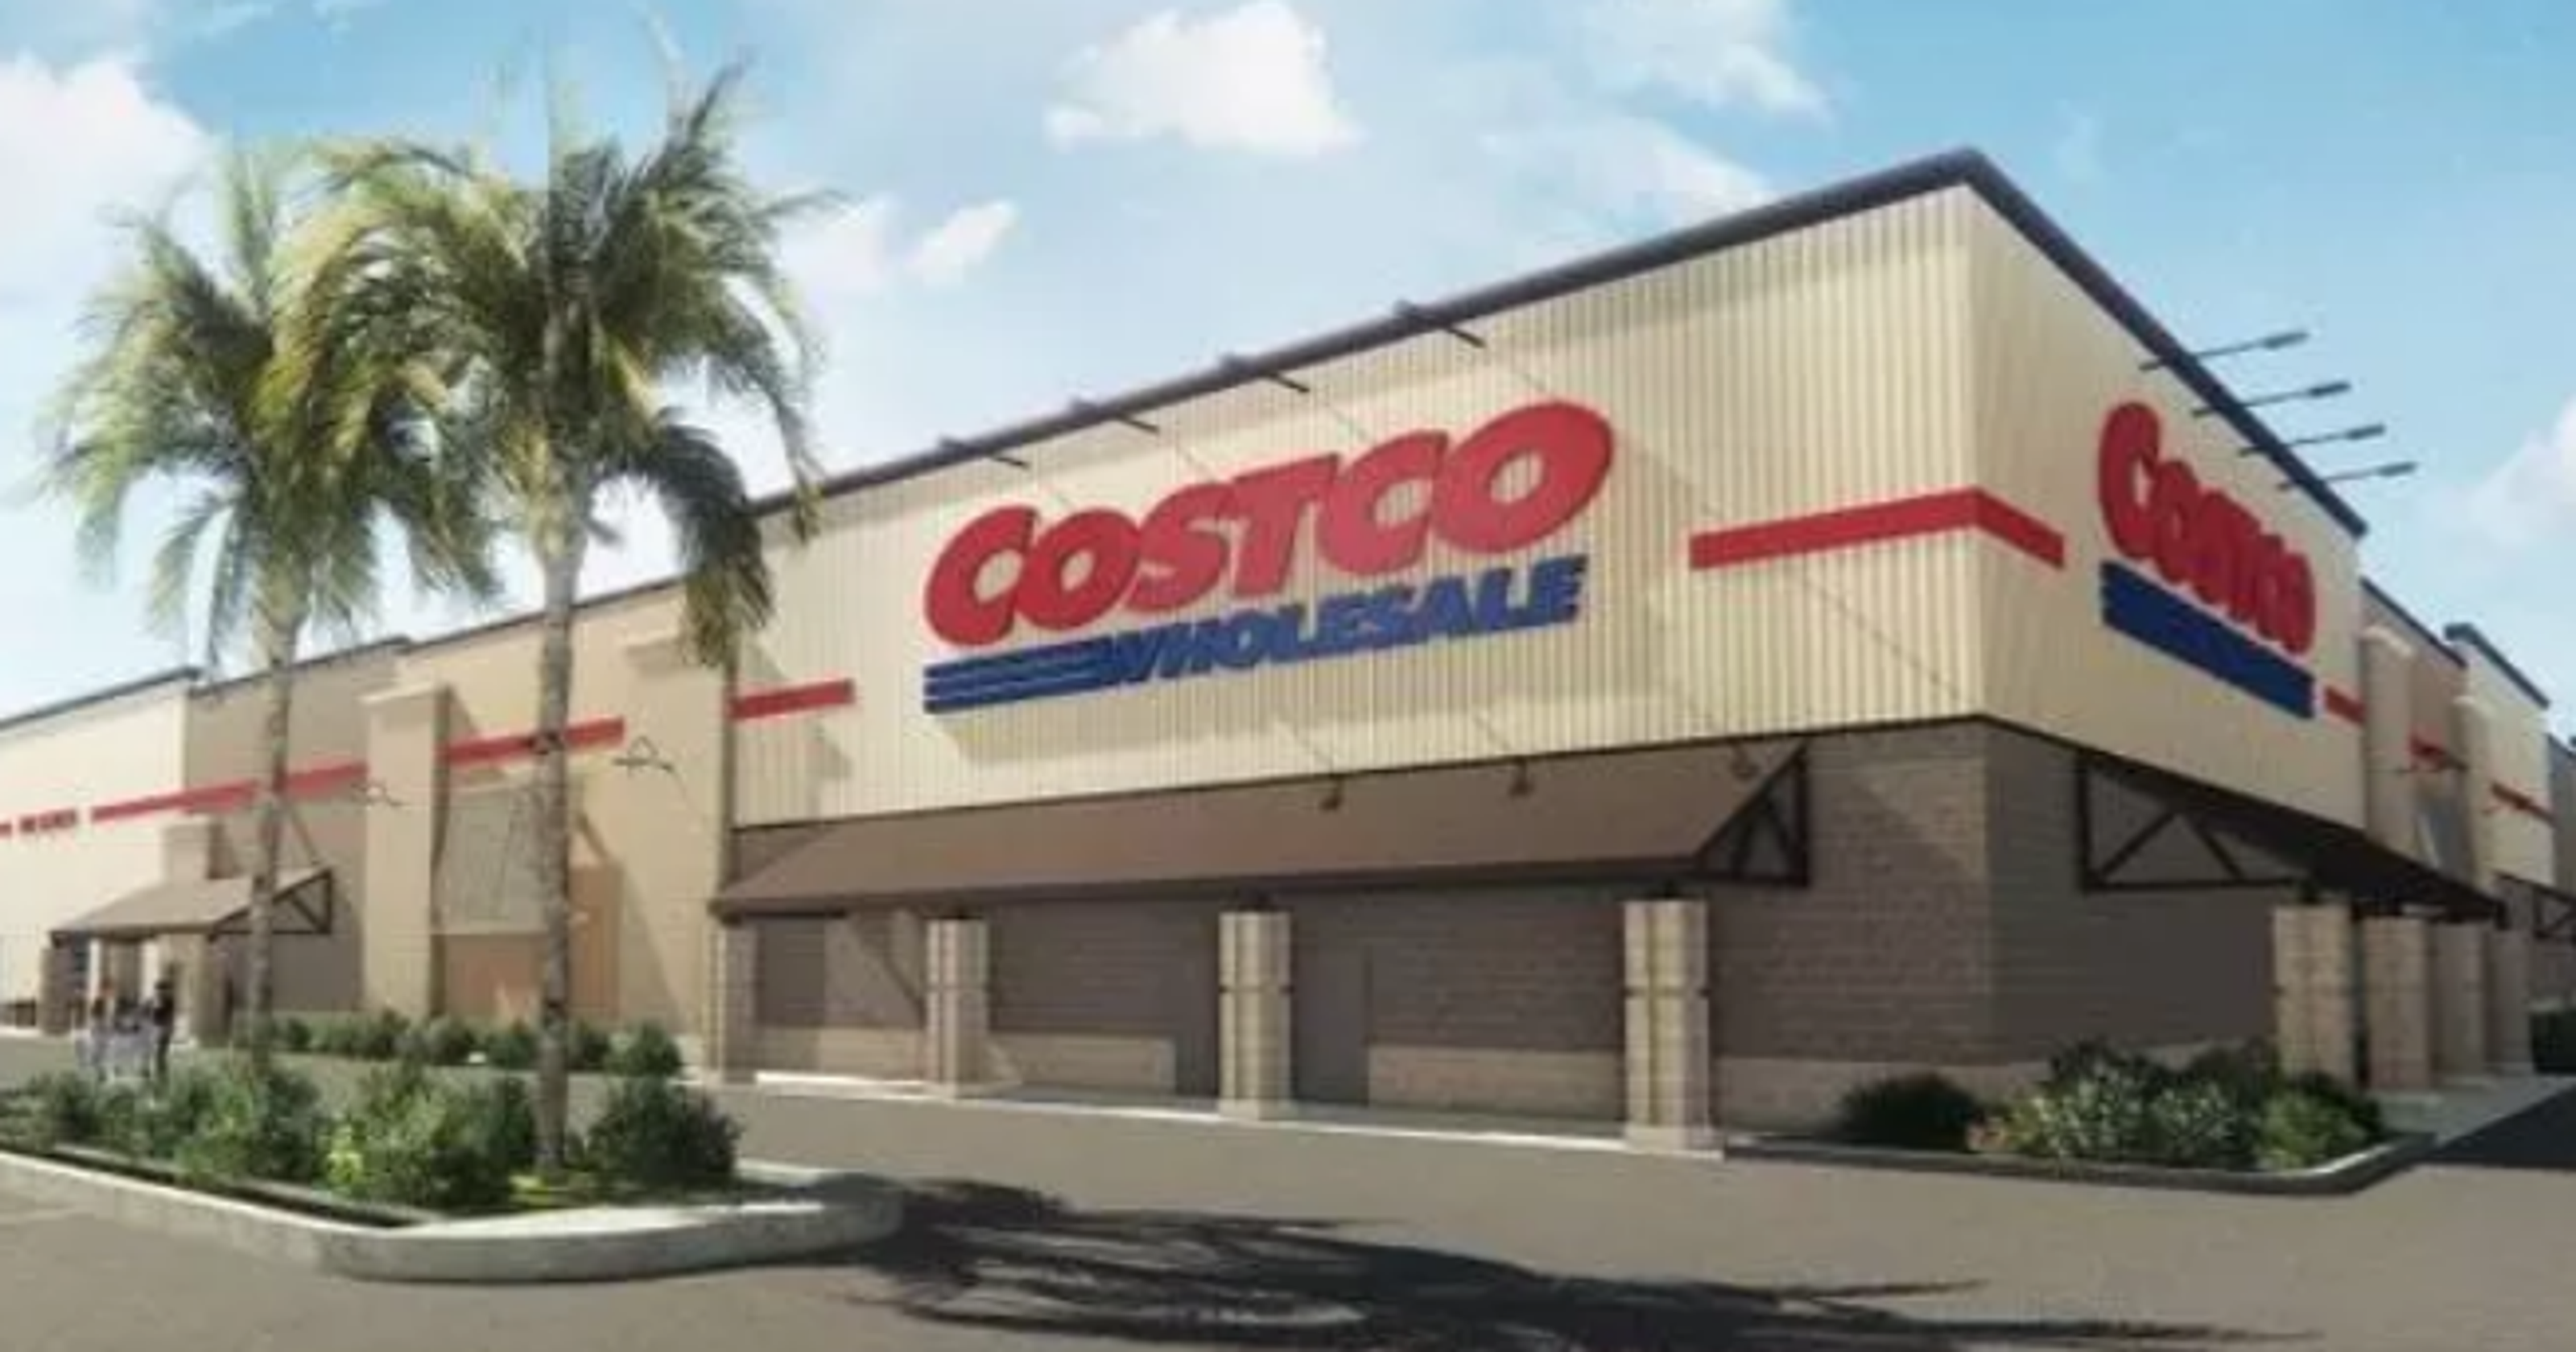 Costco considering location on Kanner Highway in Stuart